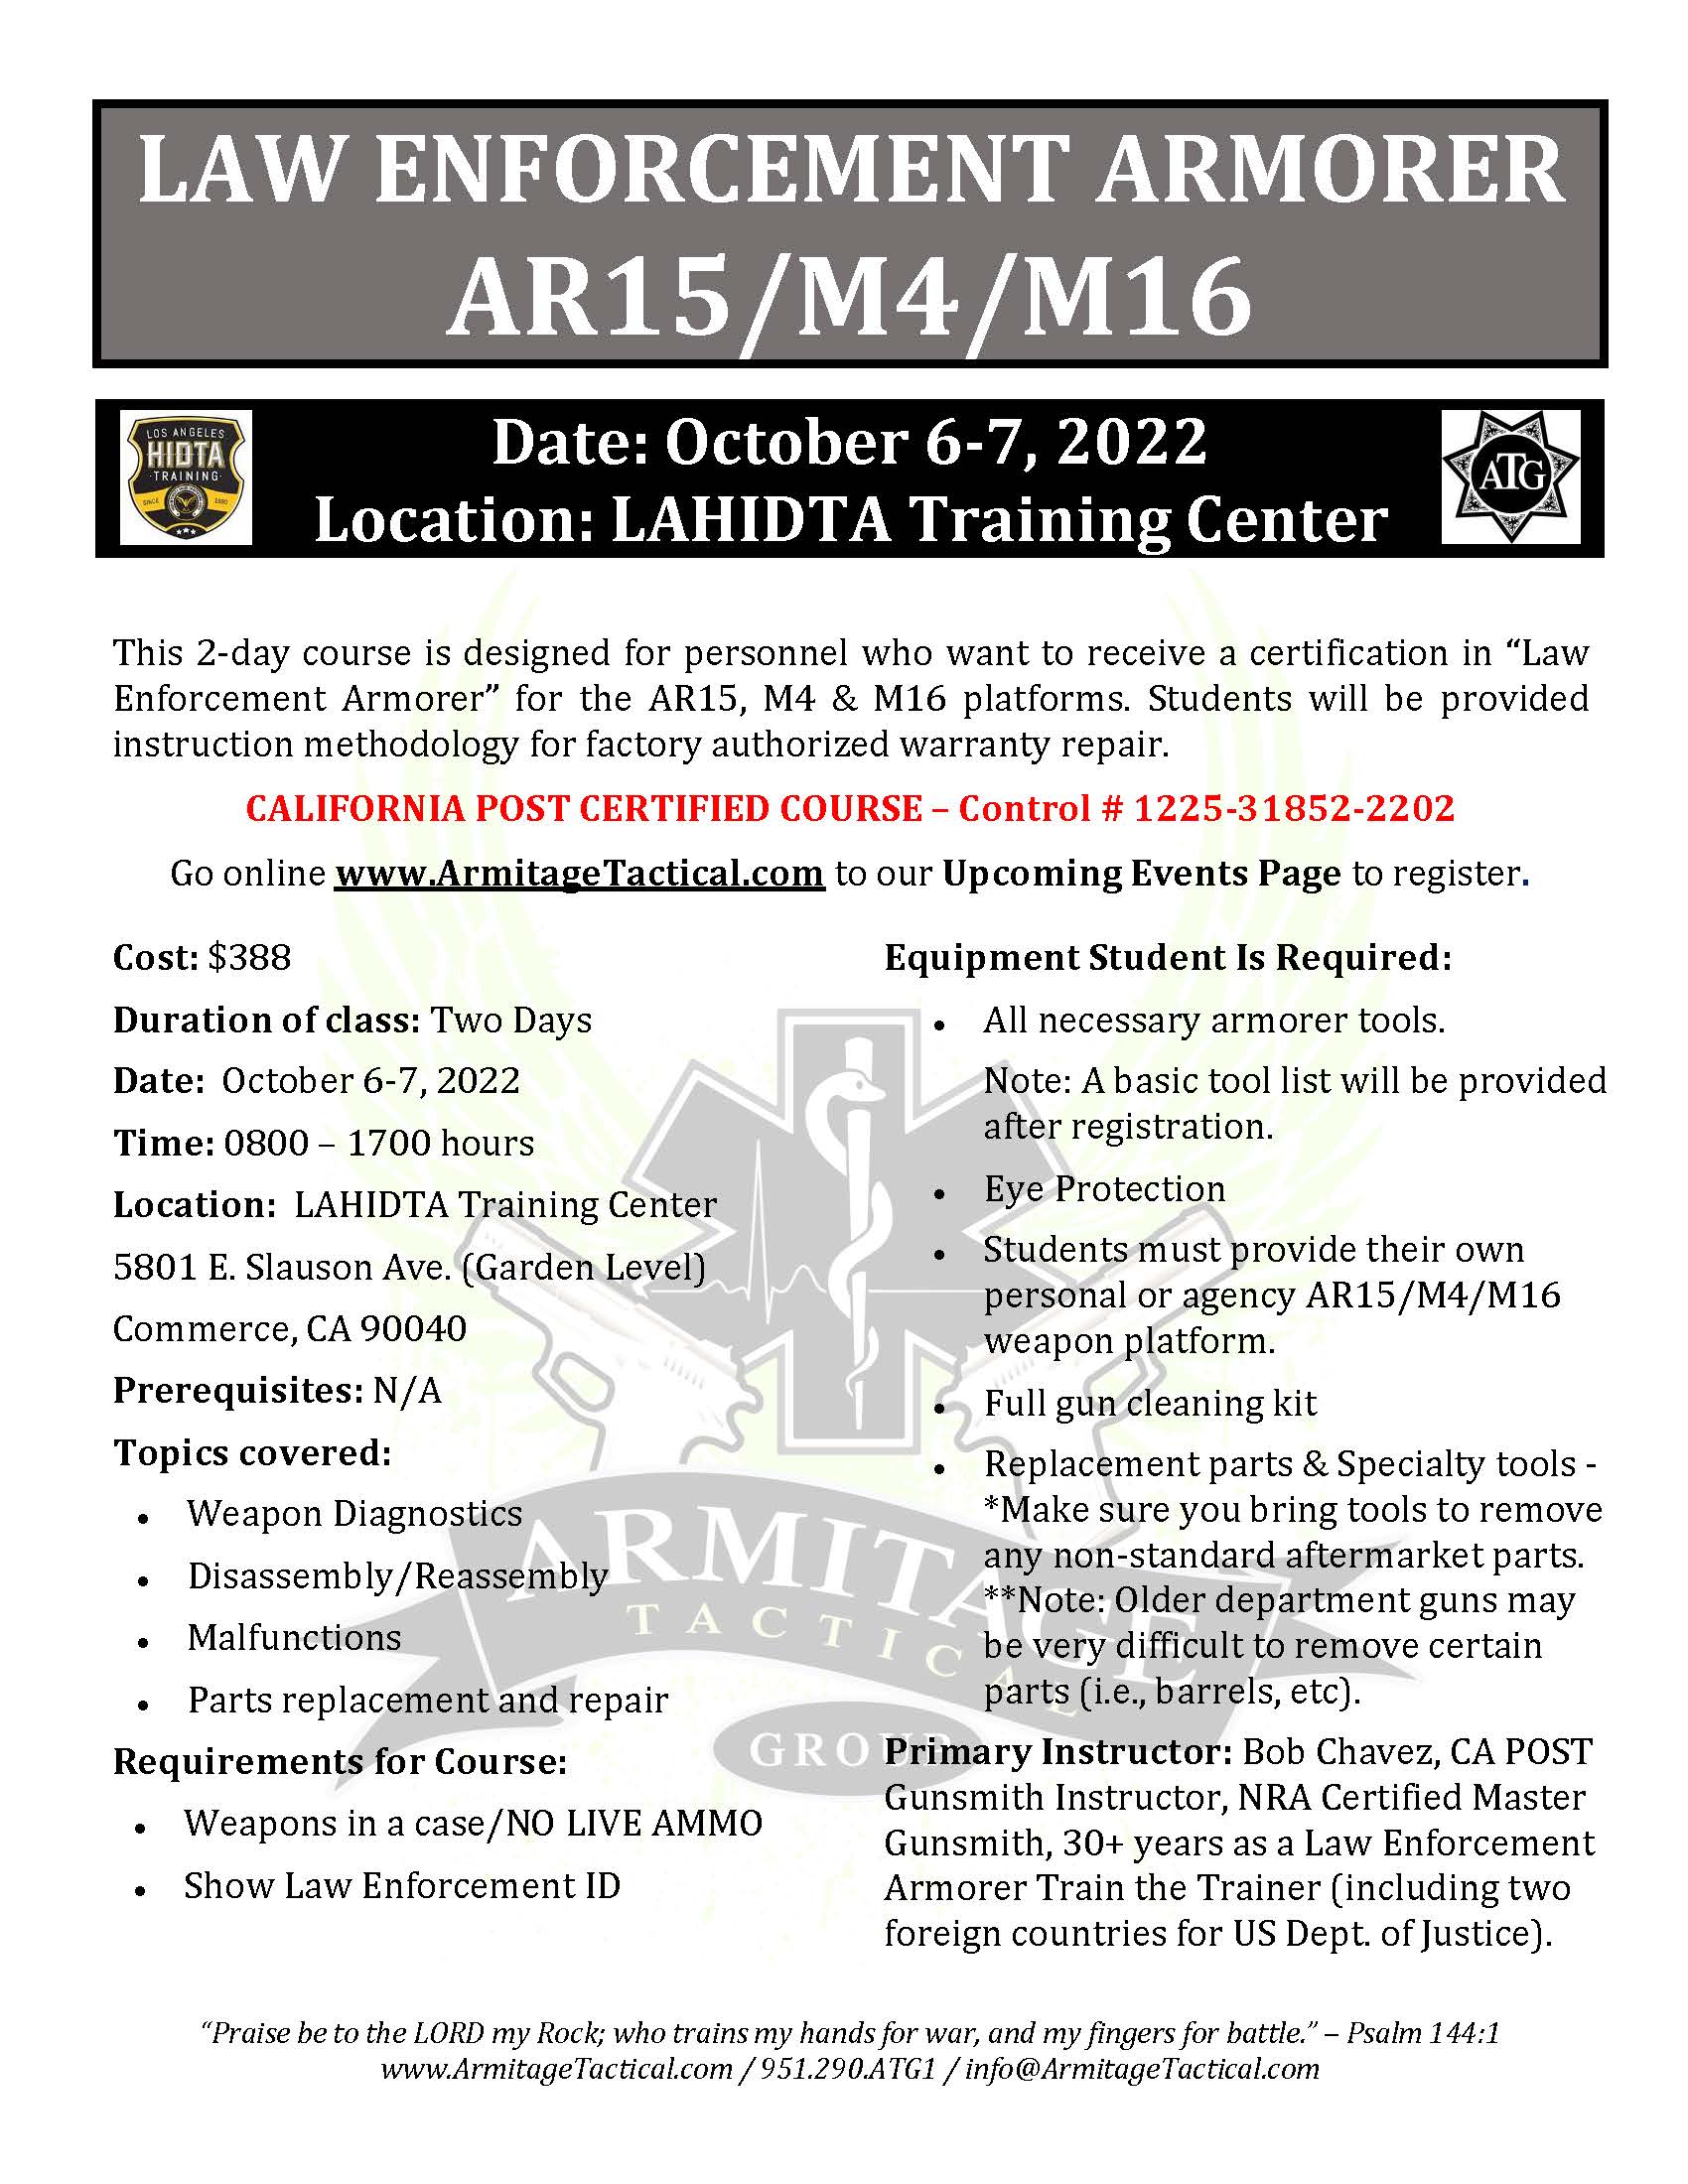 2022/10/06 - LE Armorer's Course 2-Day (AR15/M4/M16) - Commerce, CA